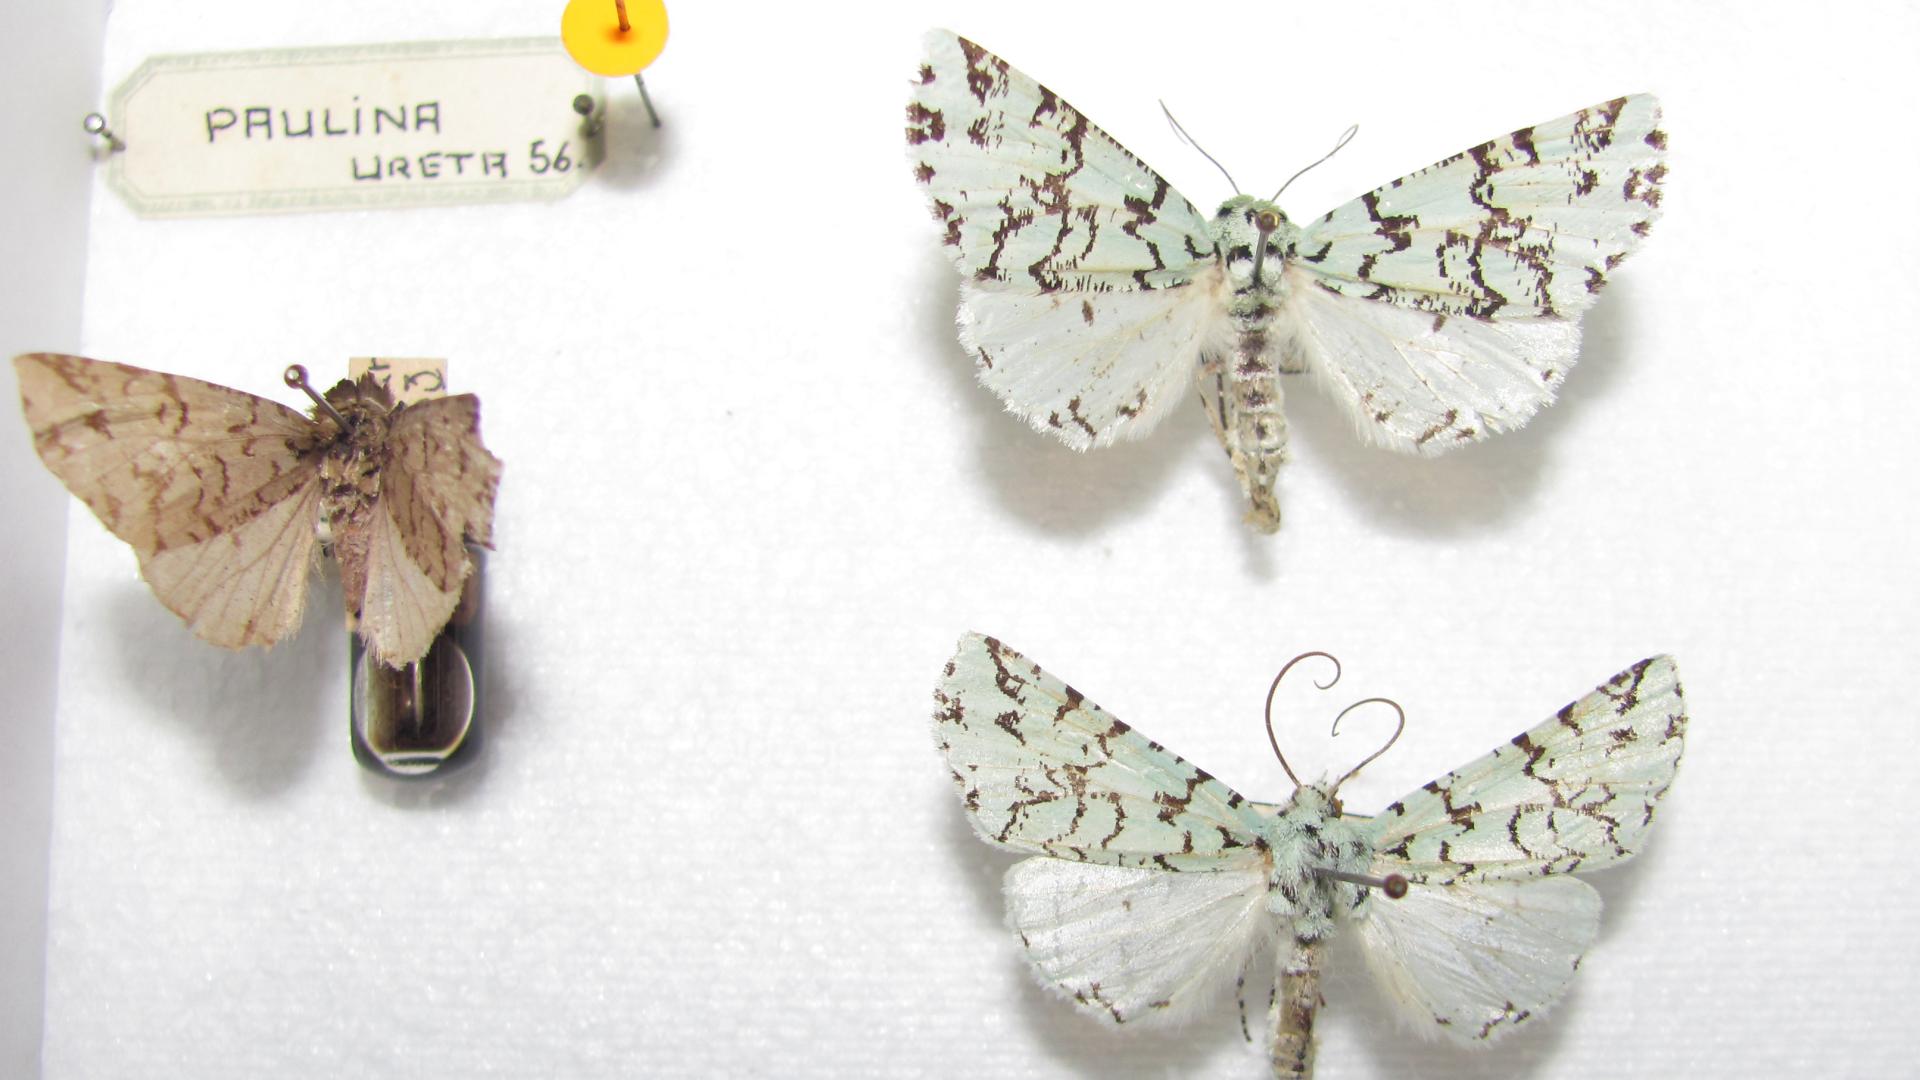 Ejemplares de Leucolithodes paulina (Ureta, 1956), de la Colección Nacional de Lepidoptera (Museo Nacional de Historia Natural, Santiago).